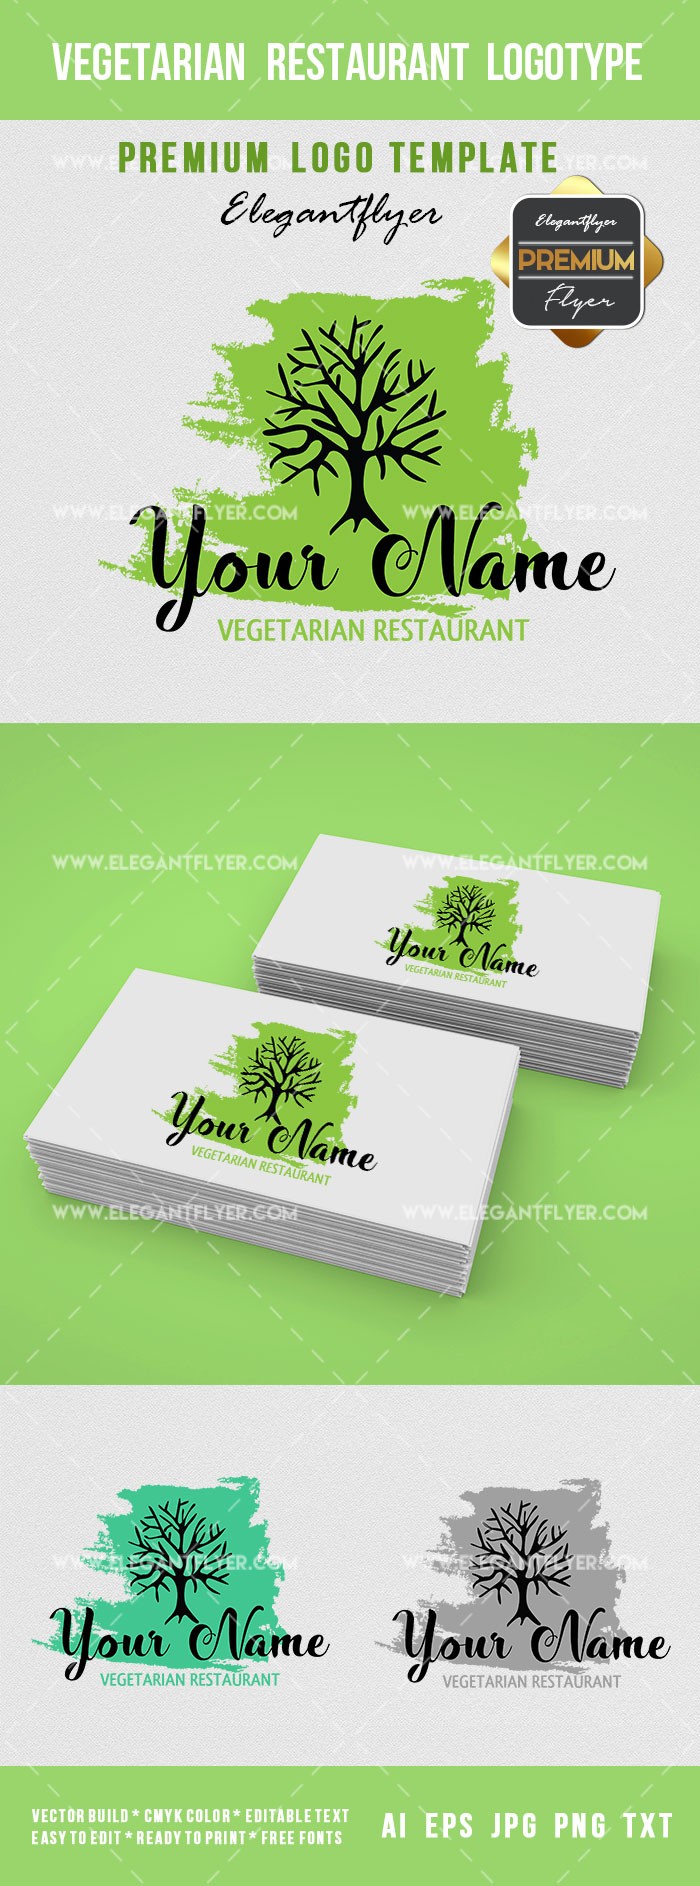 Vegetarian Restaurant by ElegantFlyer